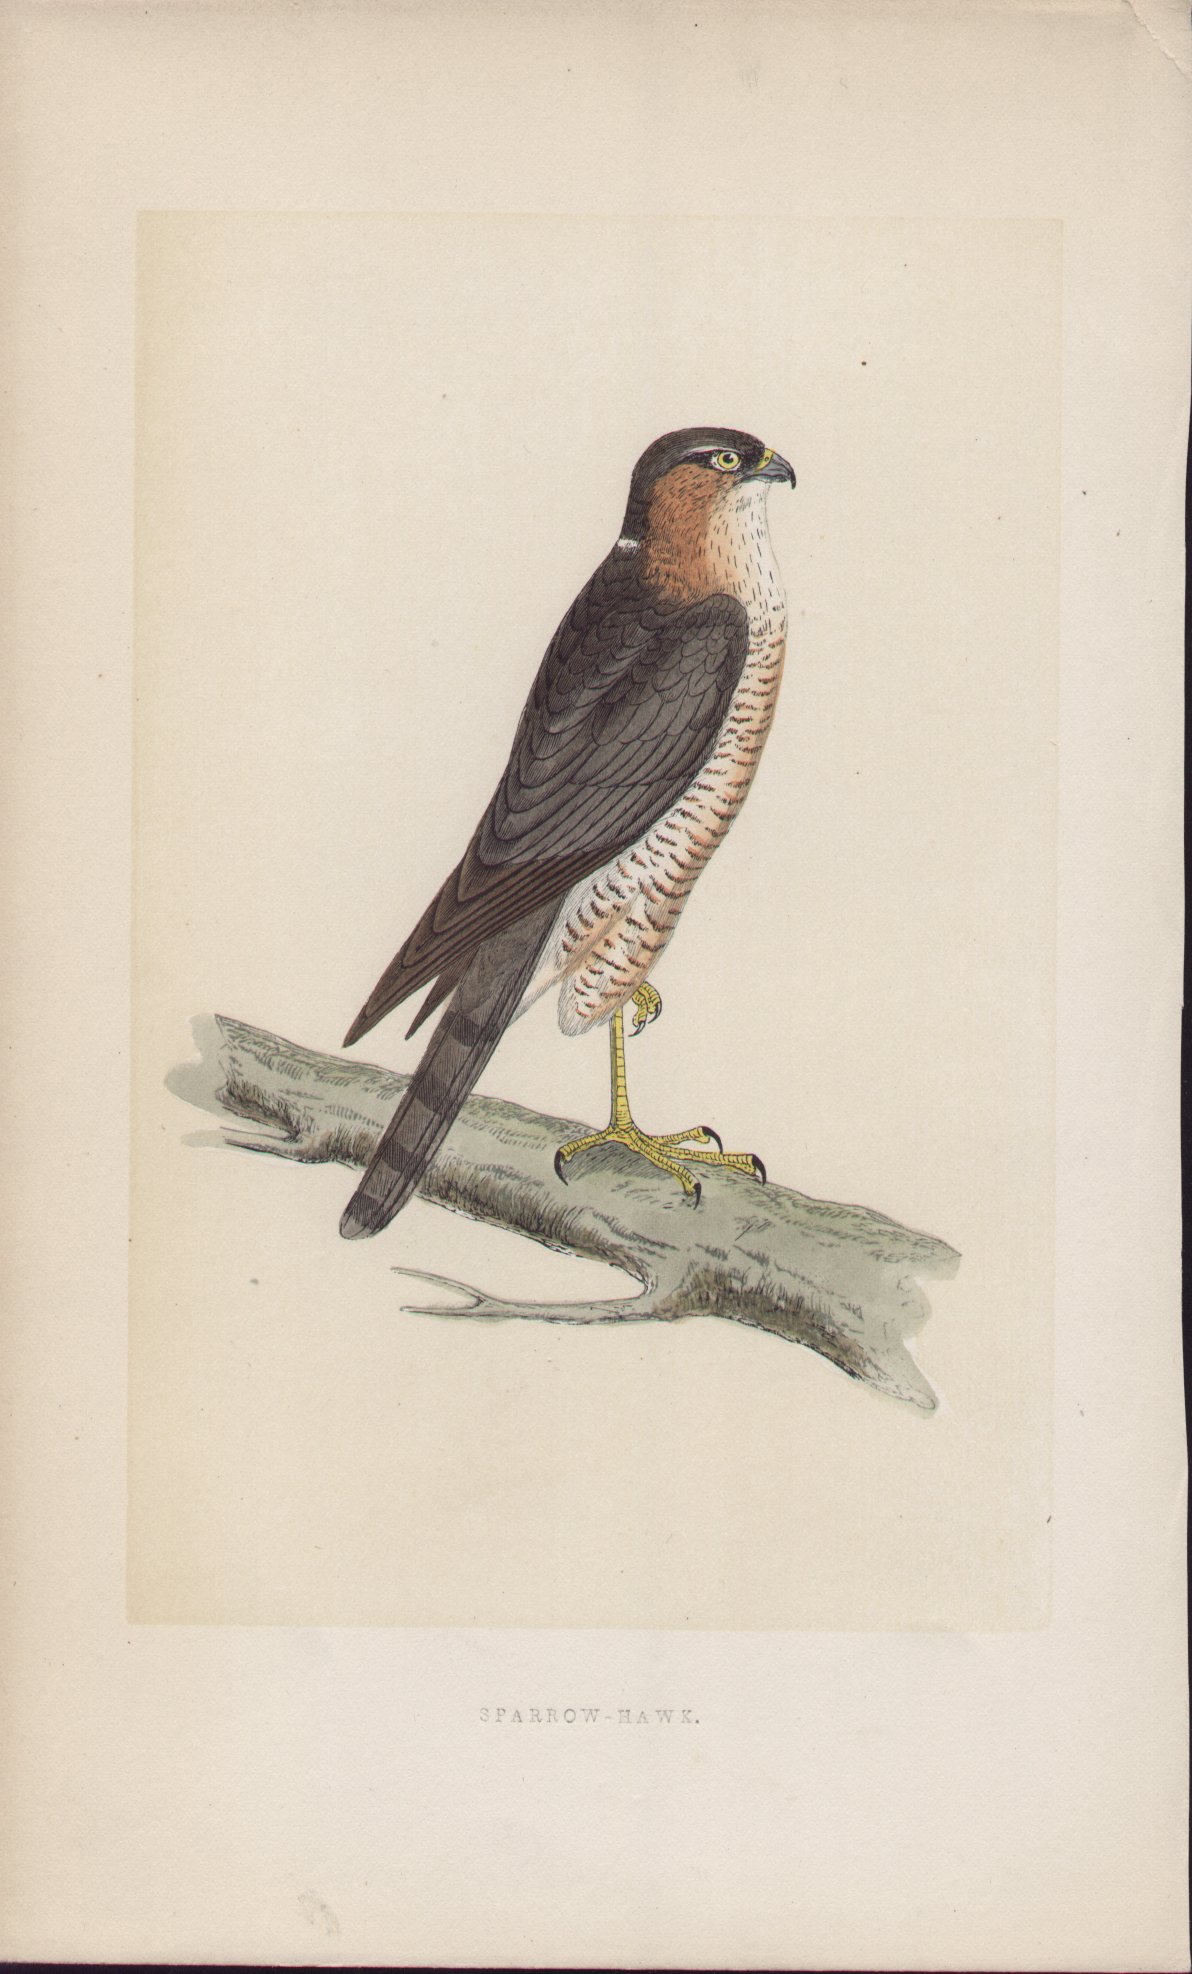 Wood - Sparrow-hawk - Fawcett